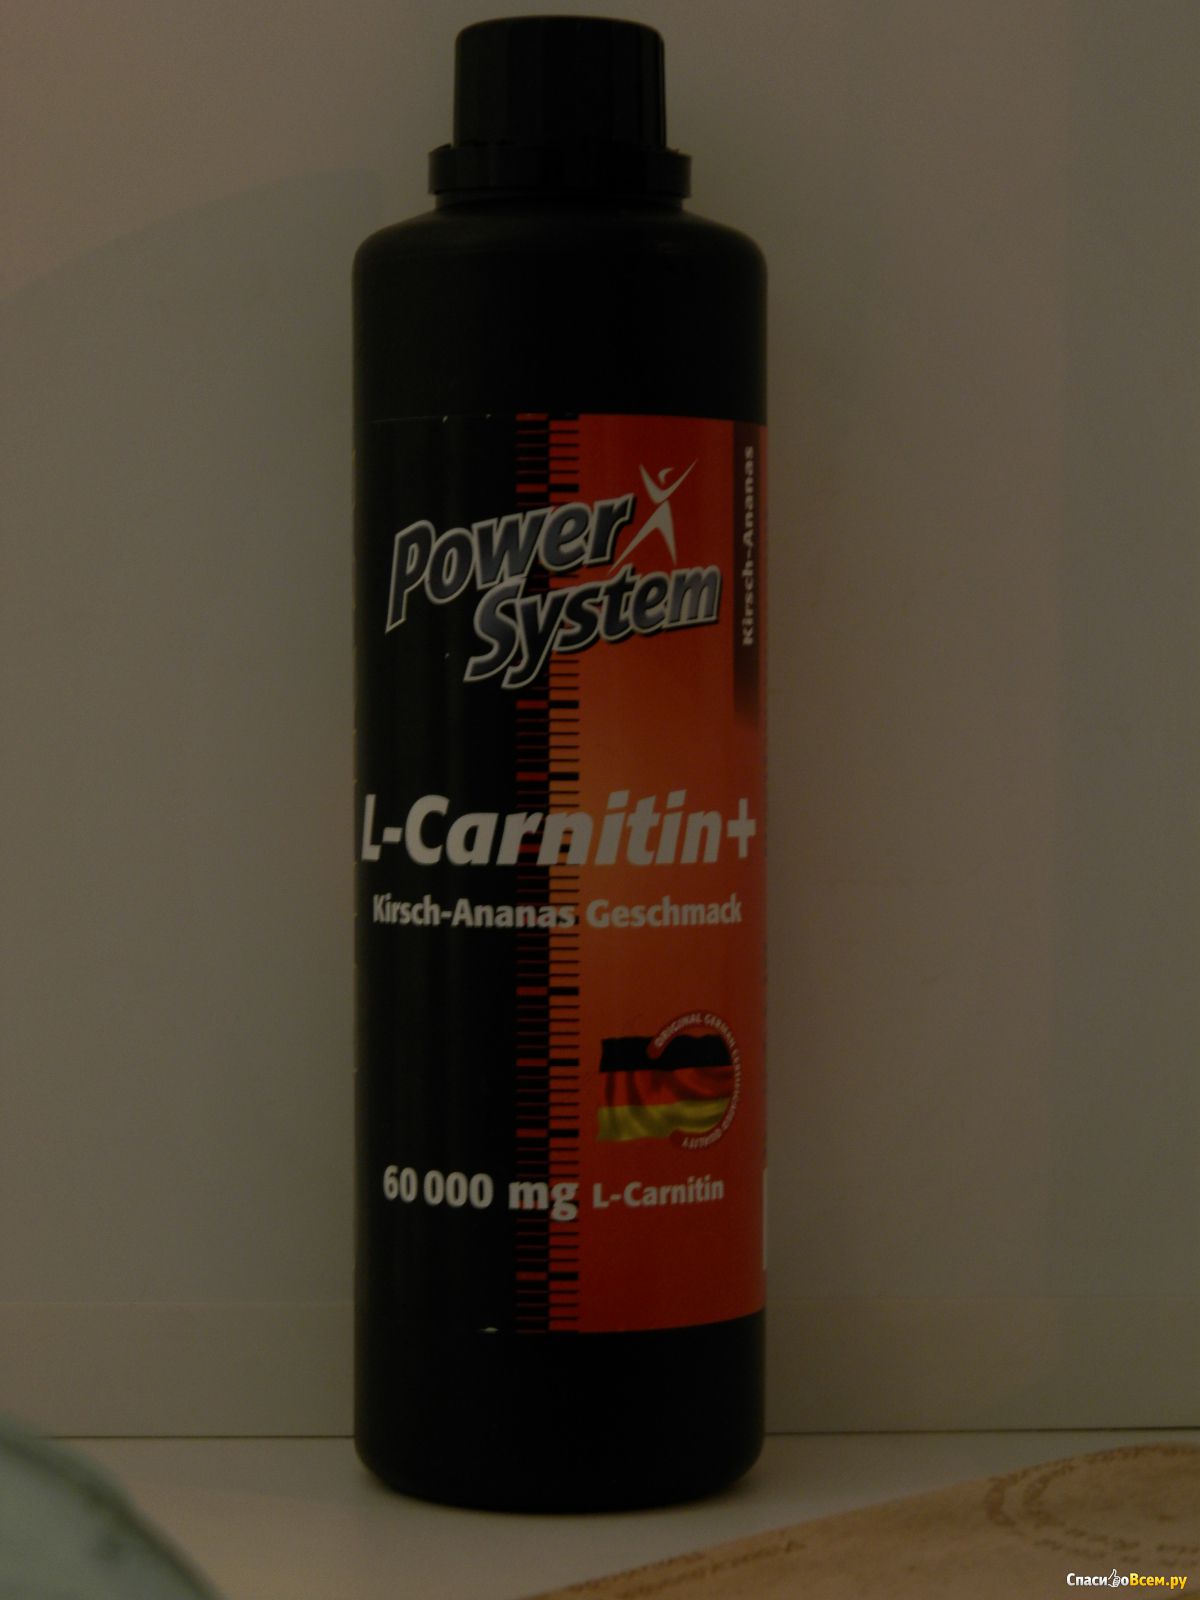 L-carnitin (power system)